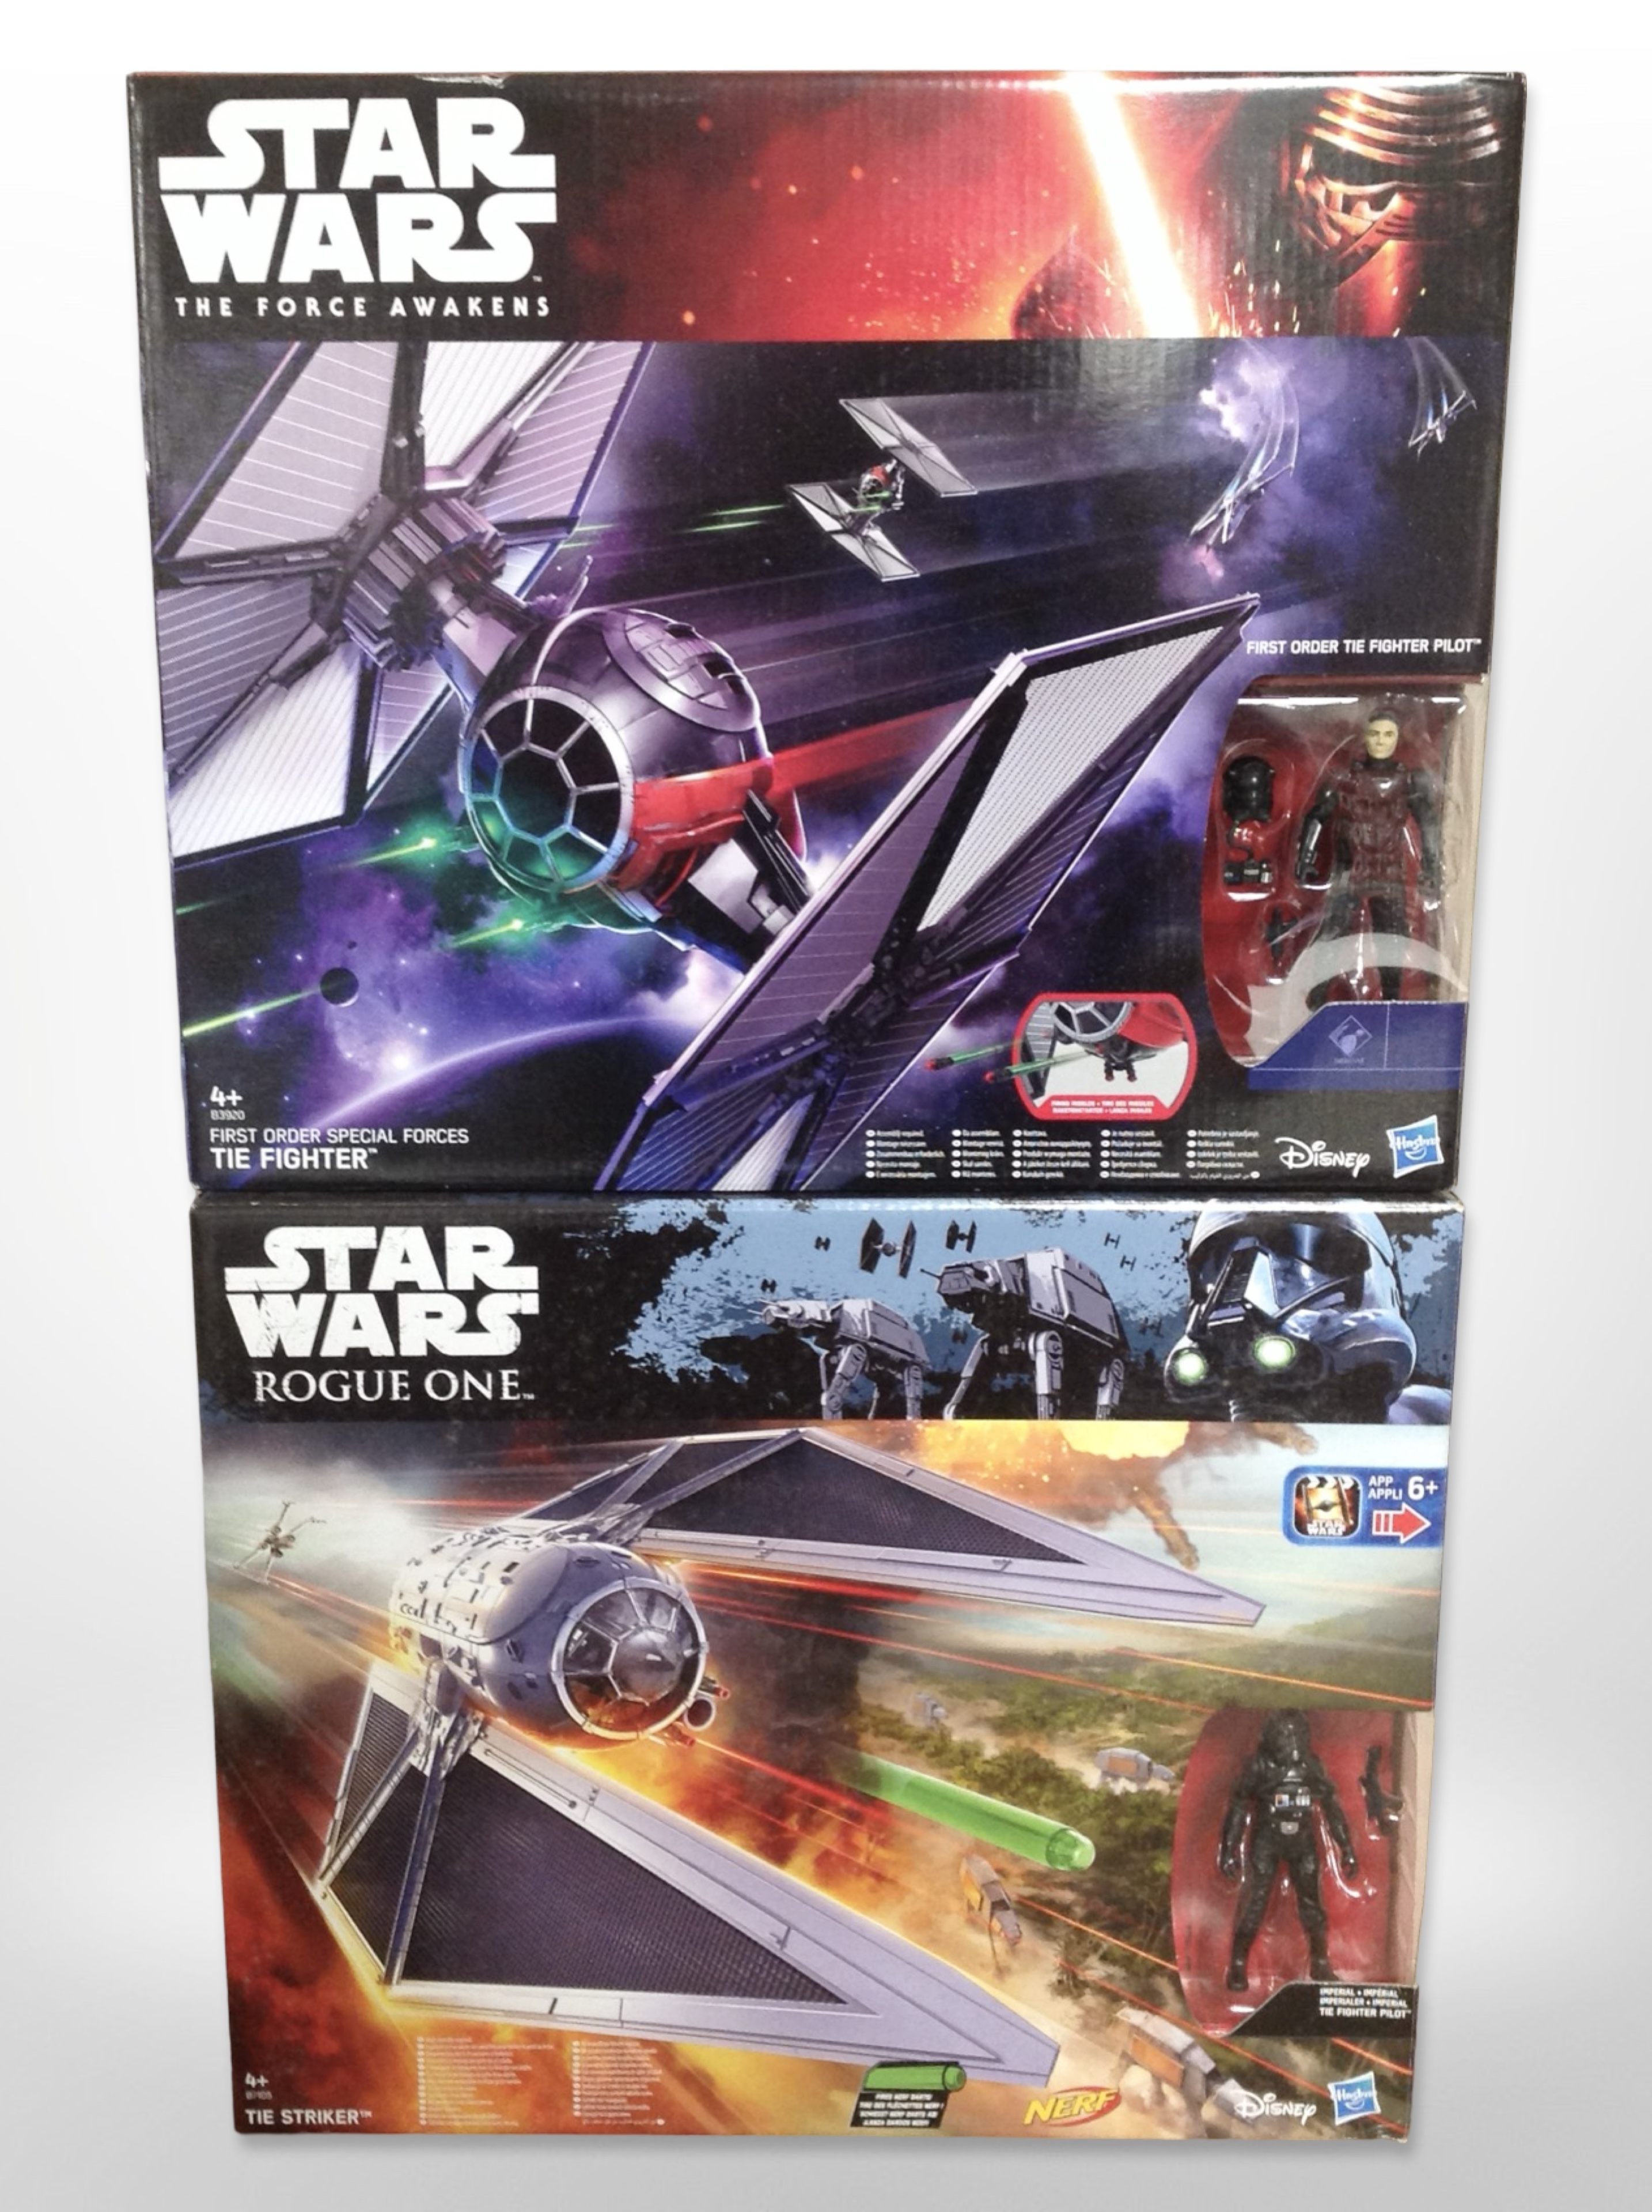 Two Hasbro Disney Star Wars models, Tie Striker and Tie Fighter, boxed.